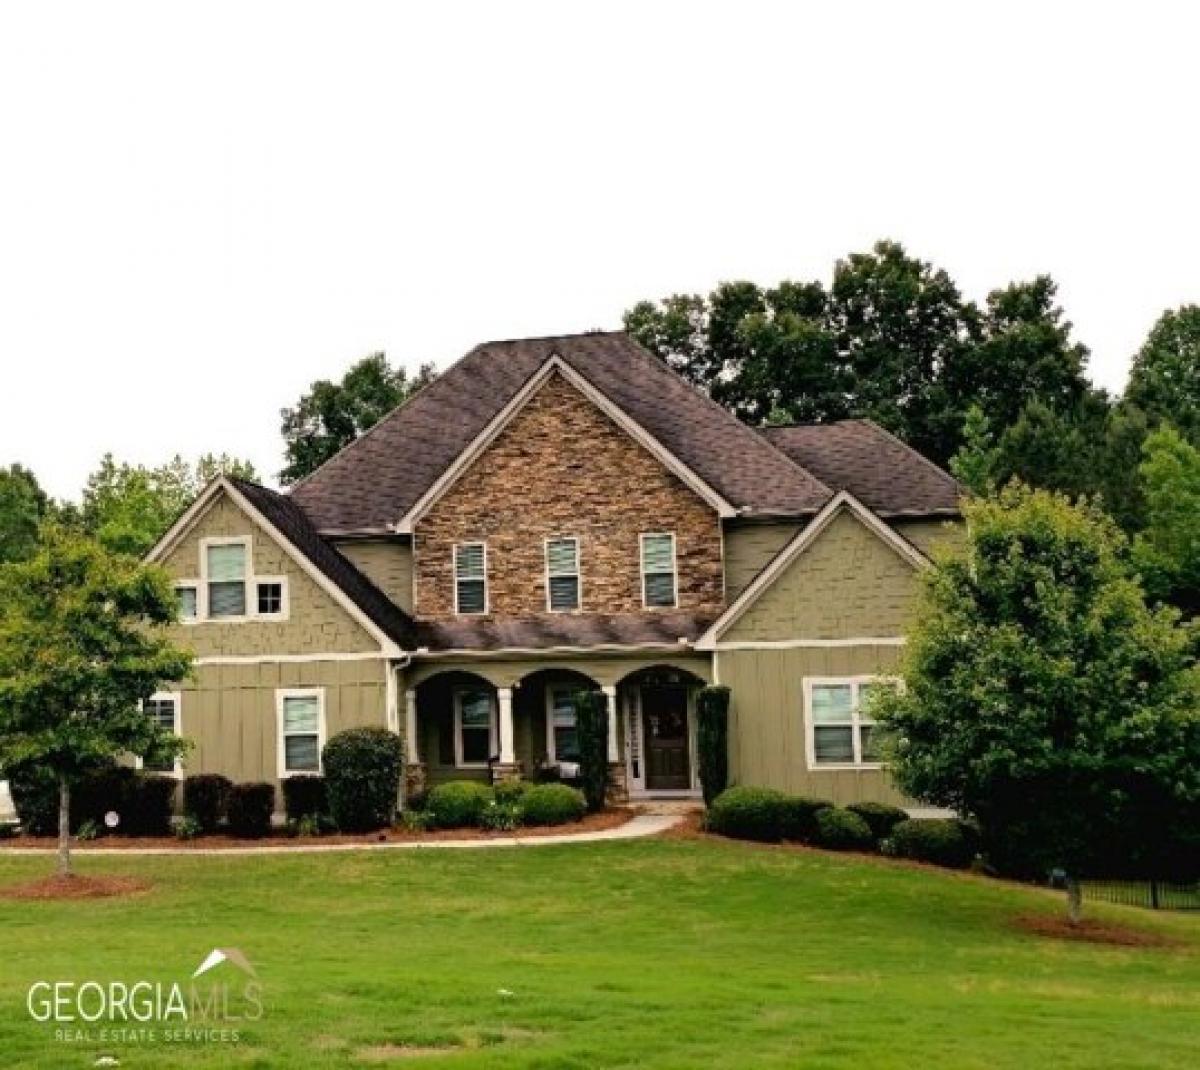 Picture of Home For Sale in Senoia, Georgia, United States